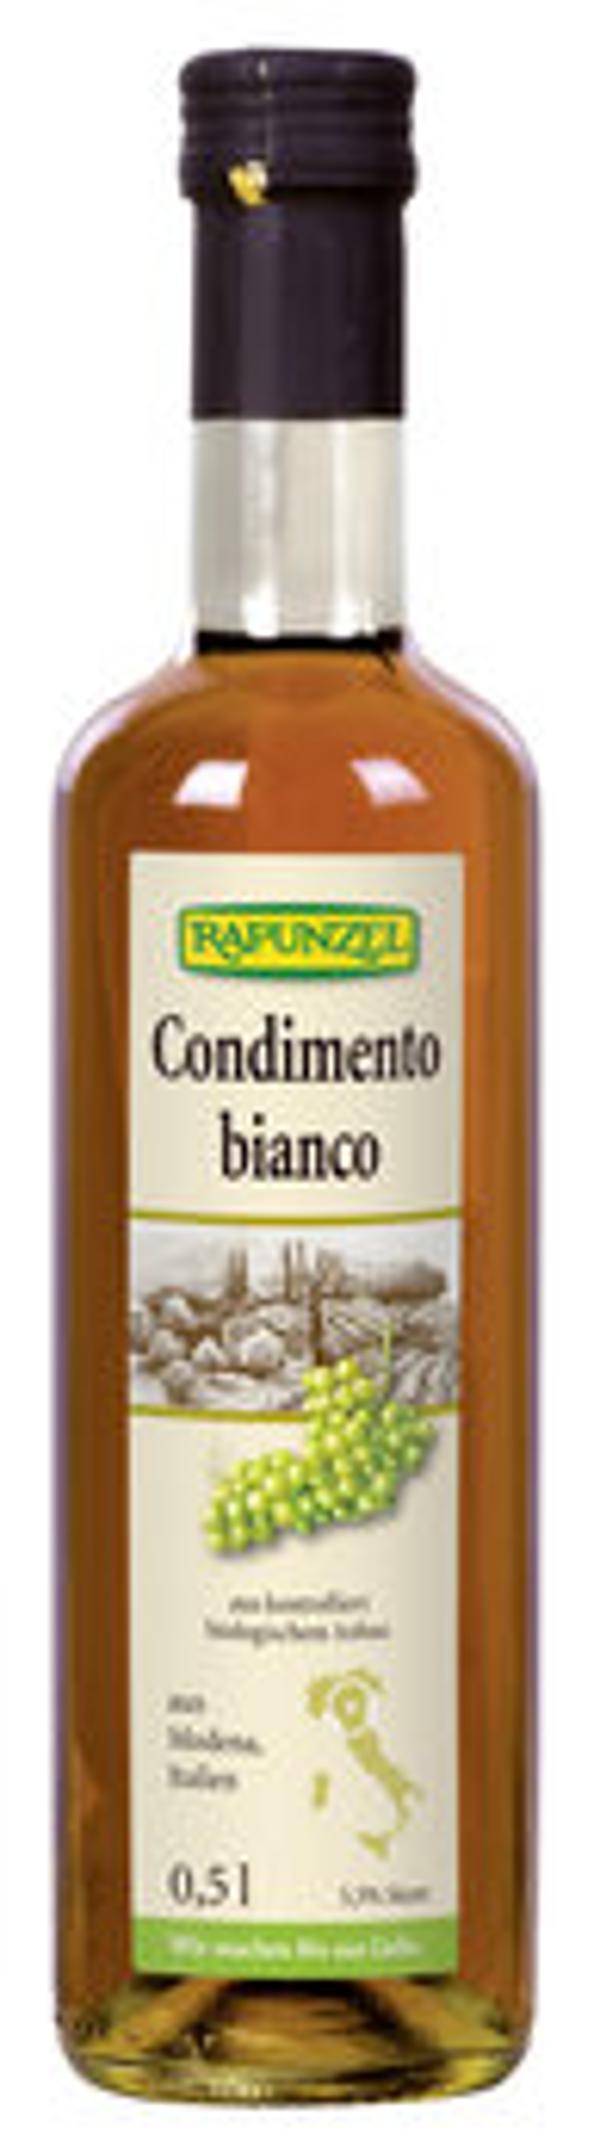 Produktfoto zu Balsamico Bianco Condimen 0,5l